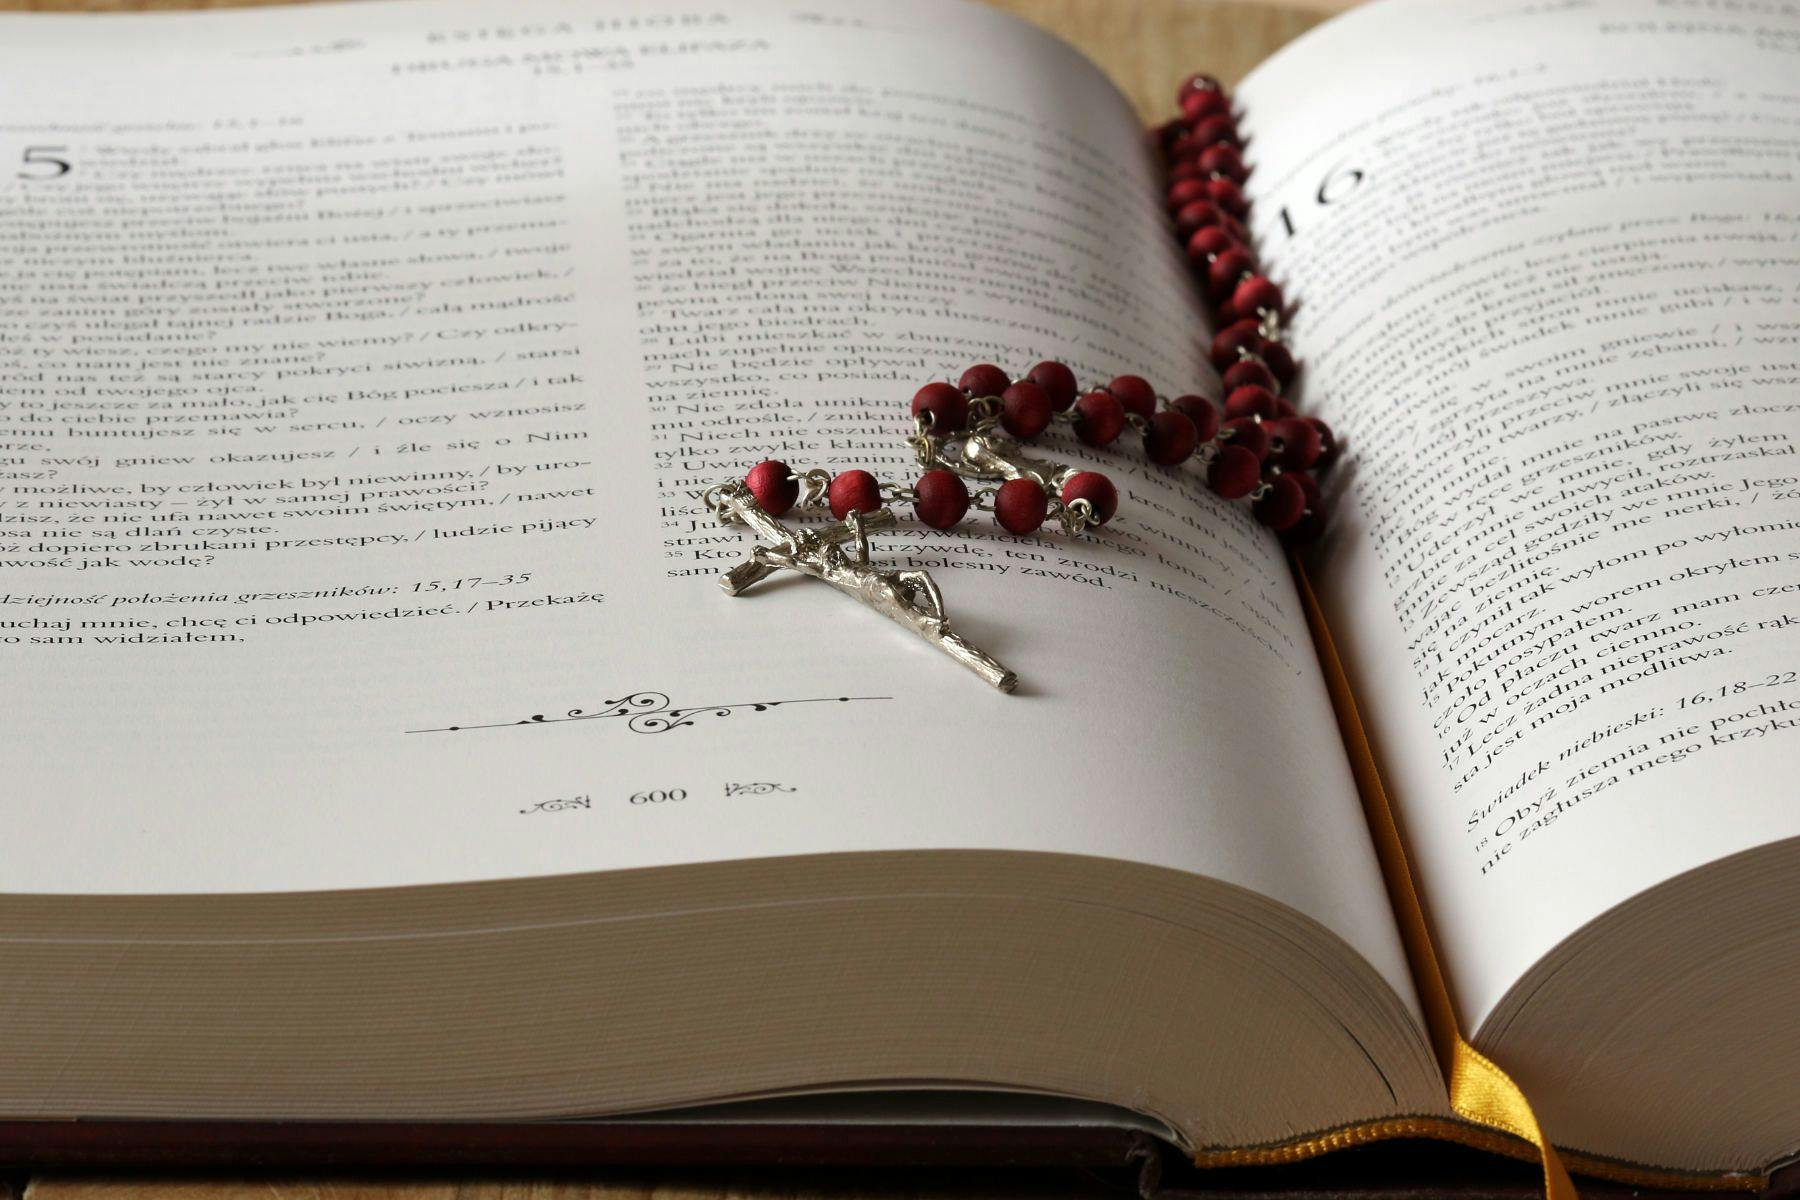 Catholic rosary on a Bible